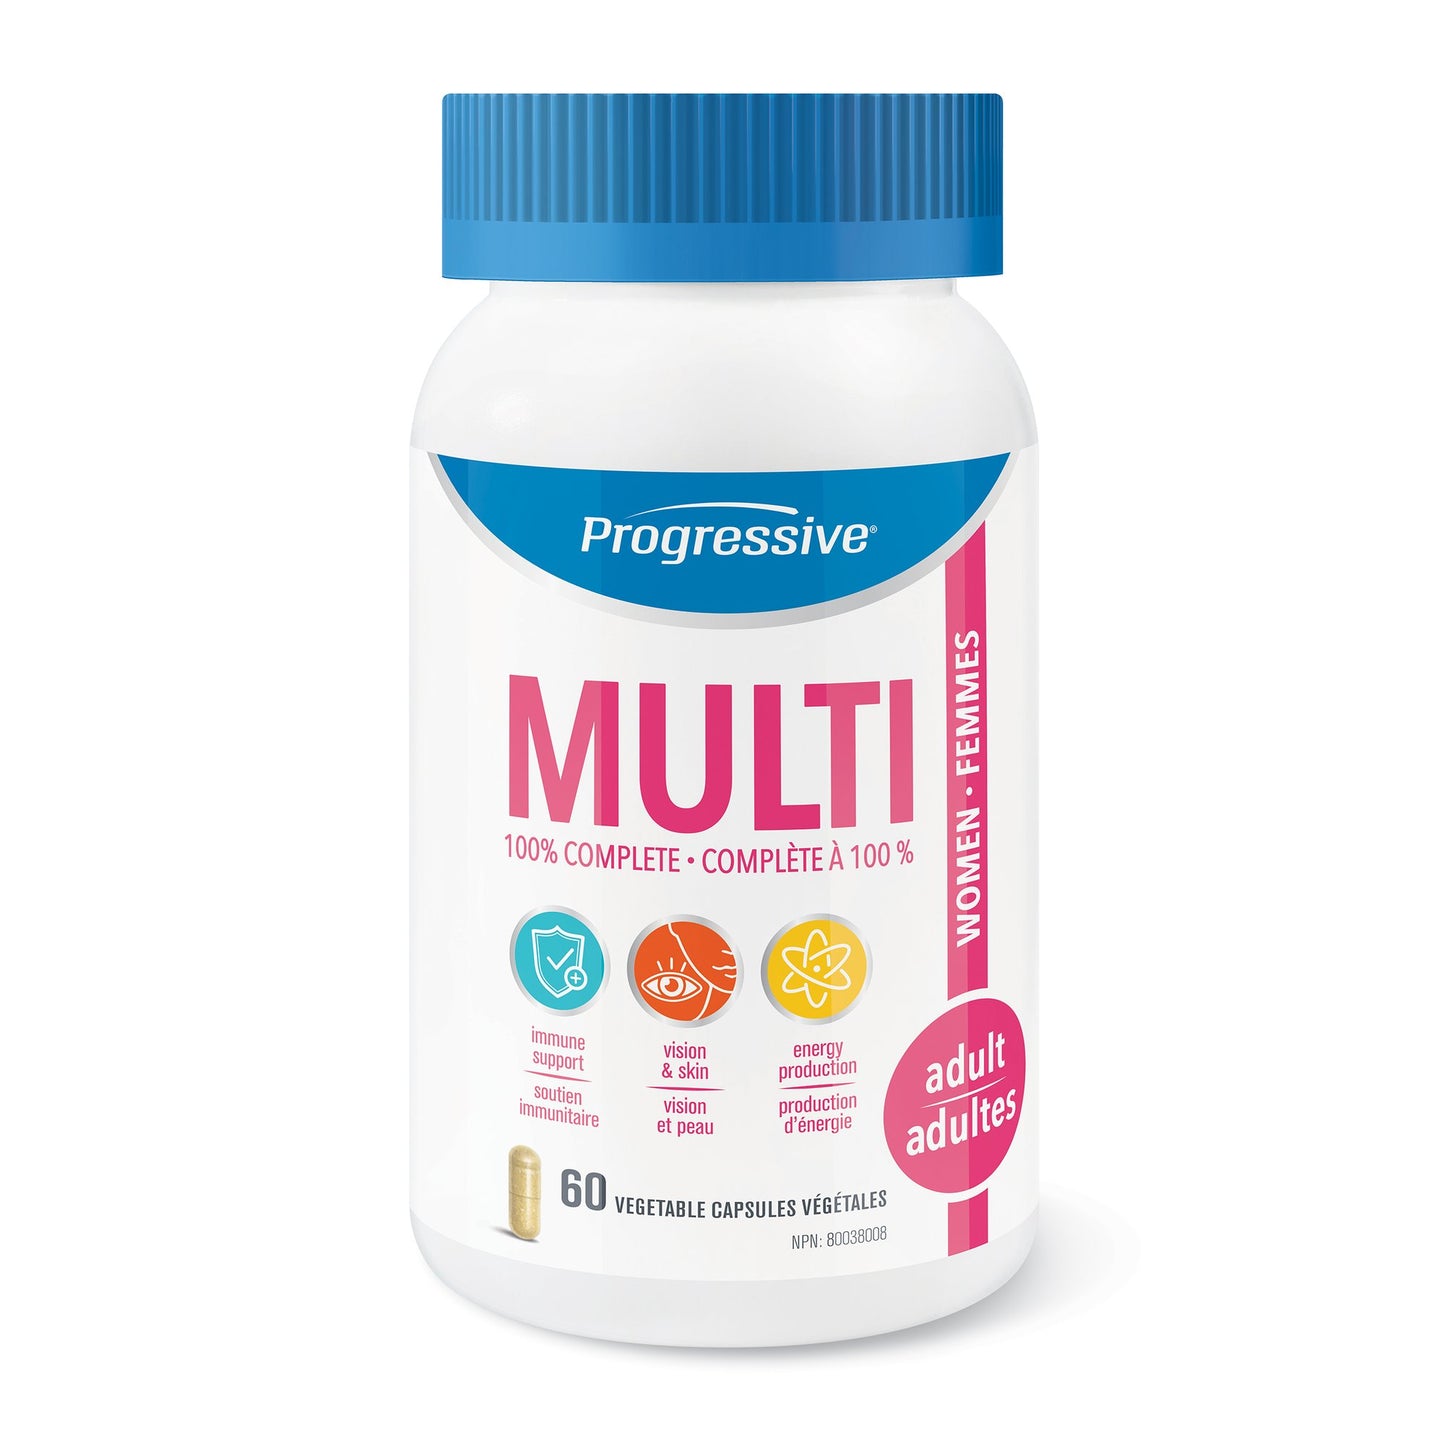 Multivitamin for Adult Women